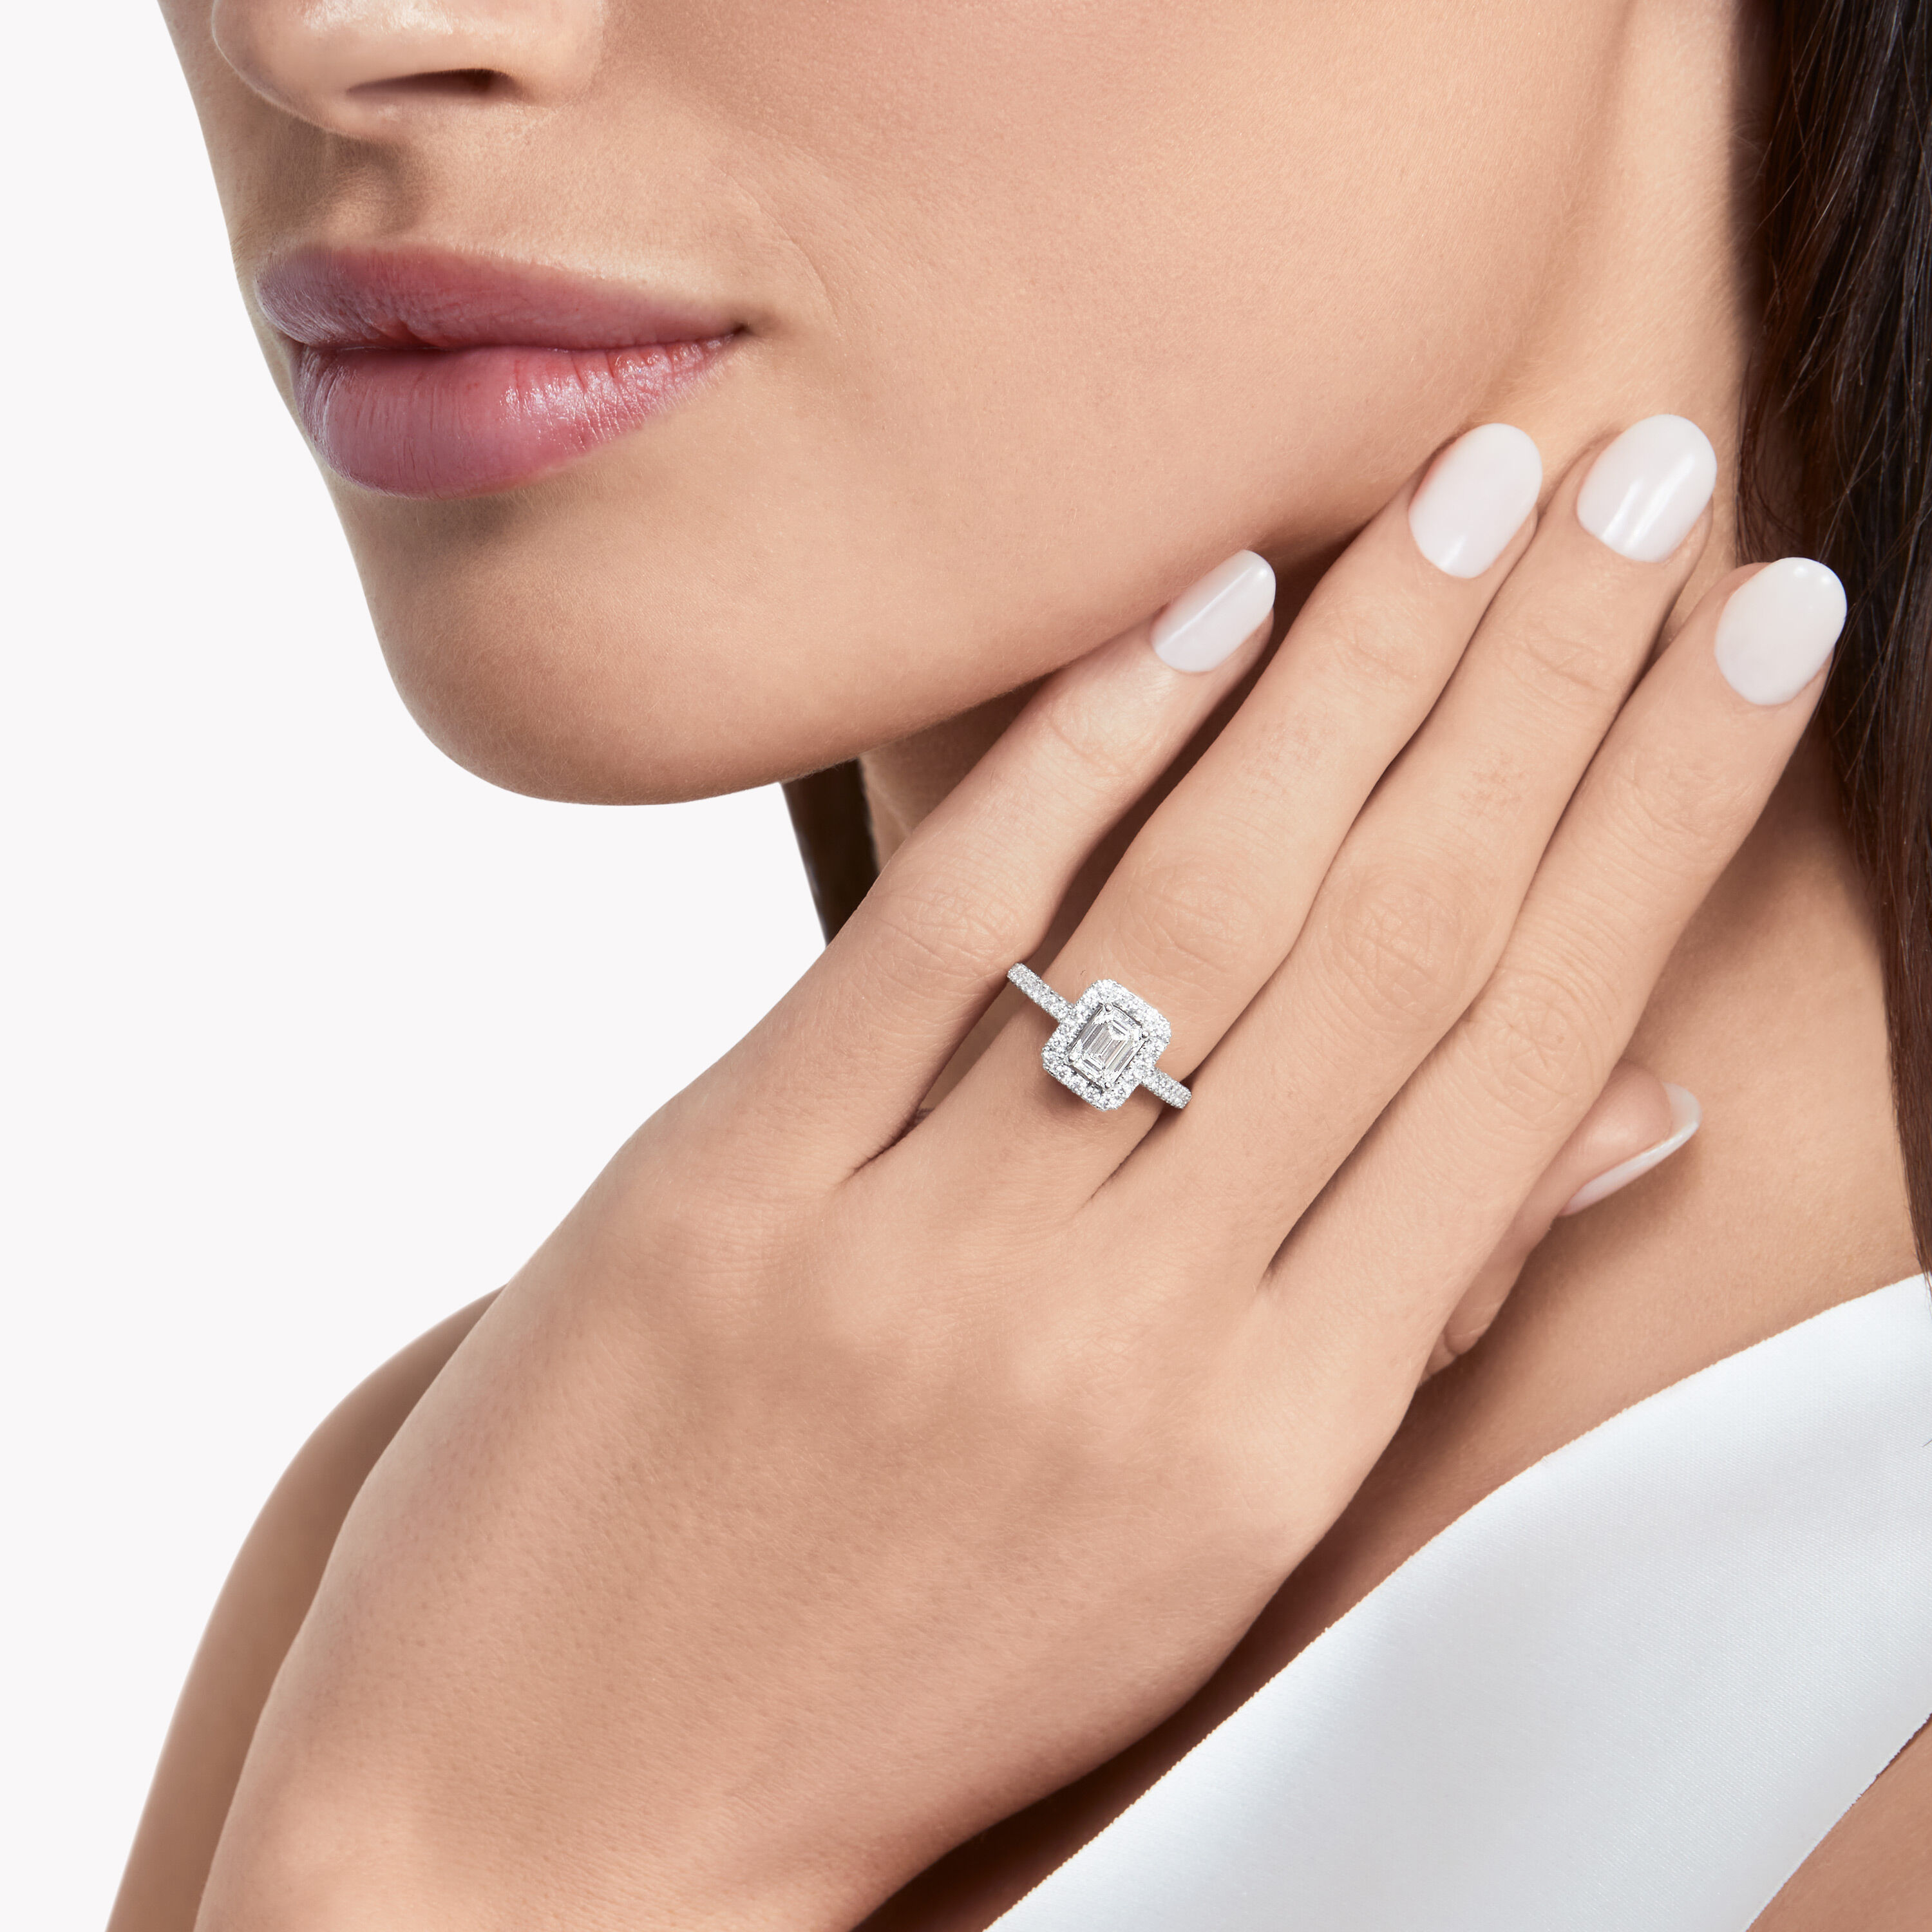 2 Carat Natural Emerald Cut Diamond Halo Engagement Ring in 14K White Gold  D/VS1 | eBay